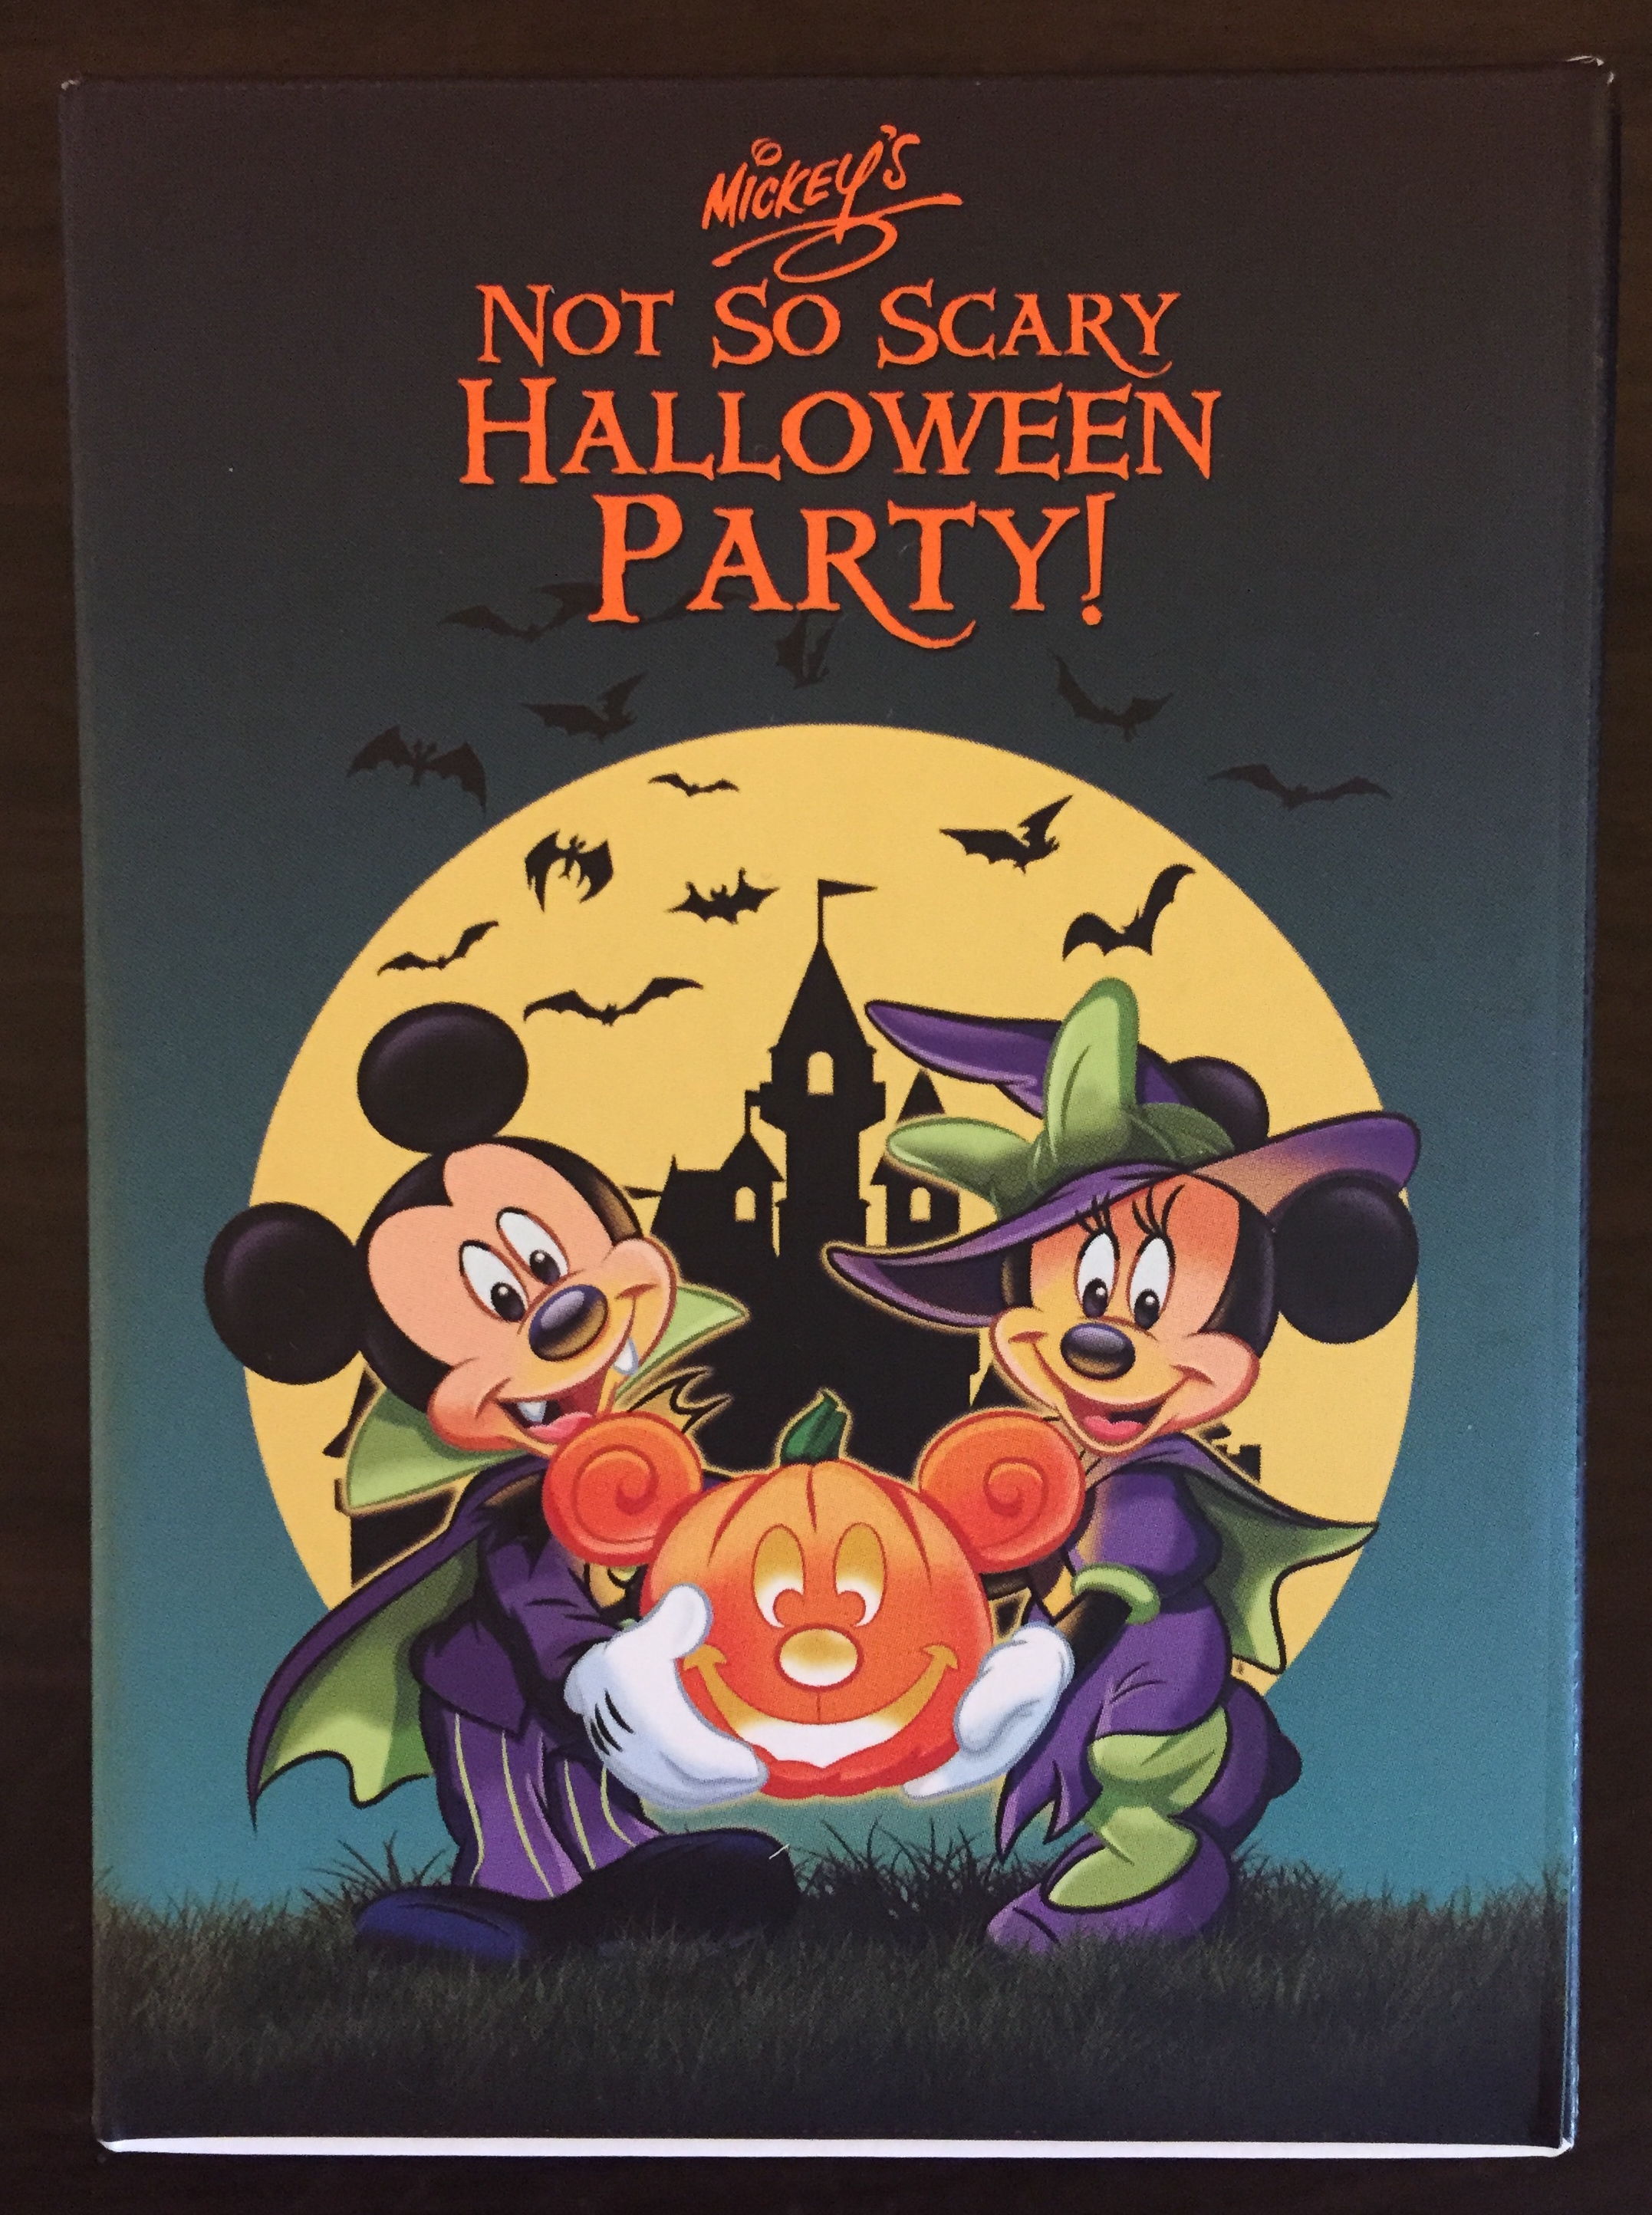 Mickey’s Not So Scary Halloween Party! 2014 – Disney MagicBand